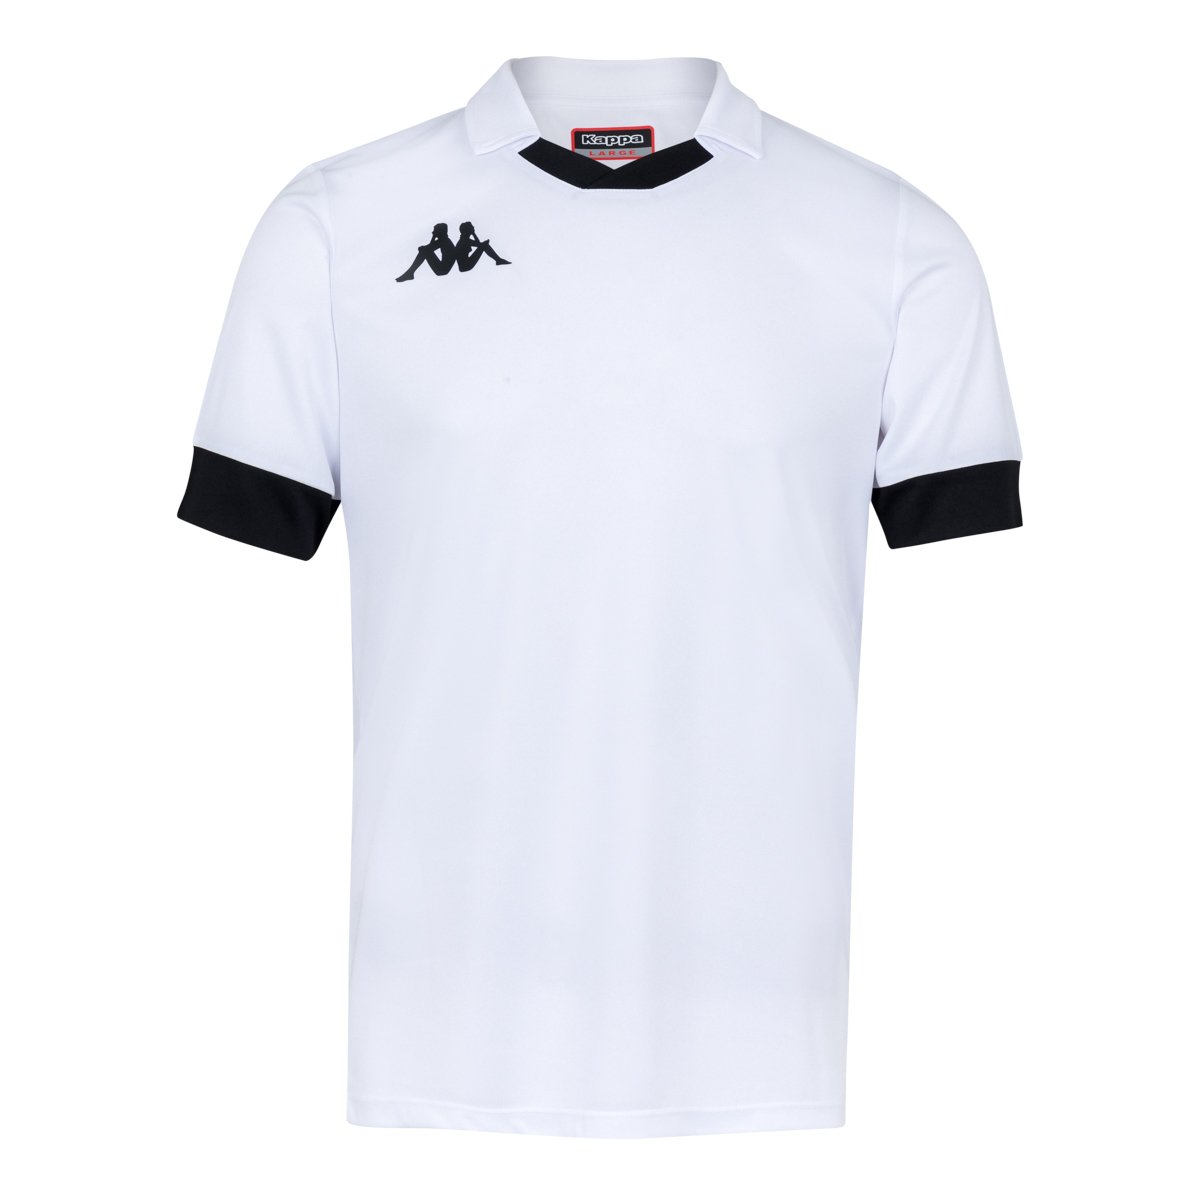 Camiseta Tranio hombre Blanco - Imagen 1